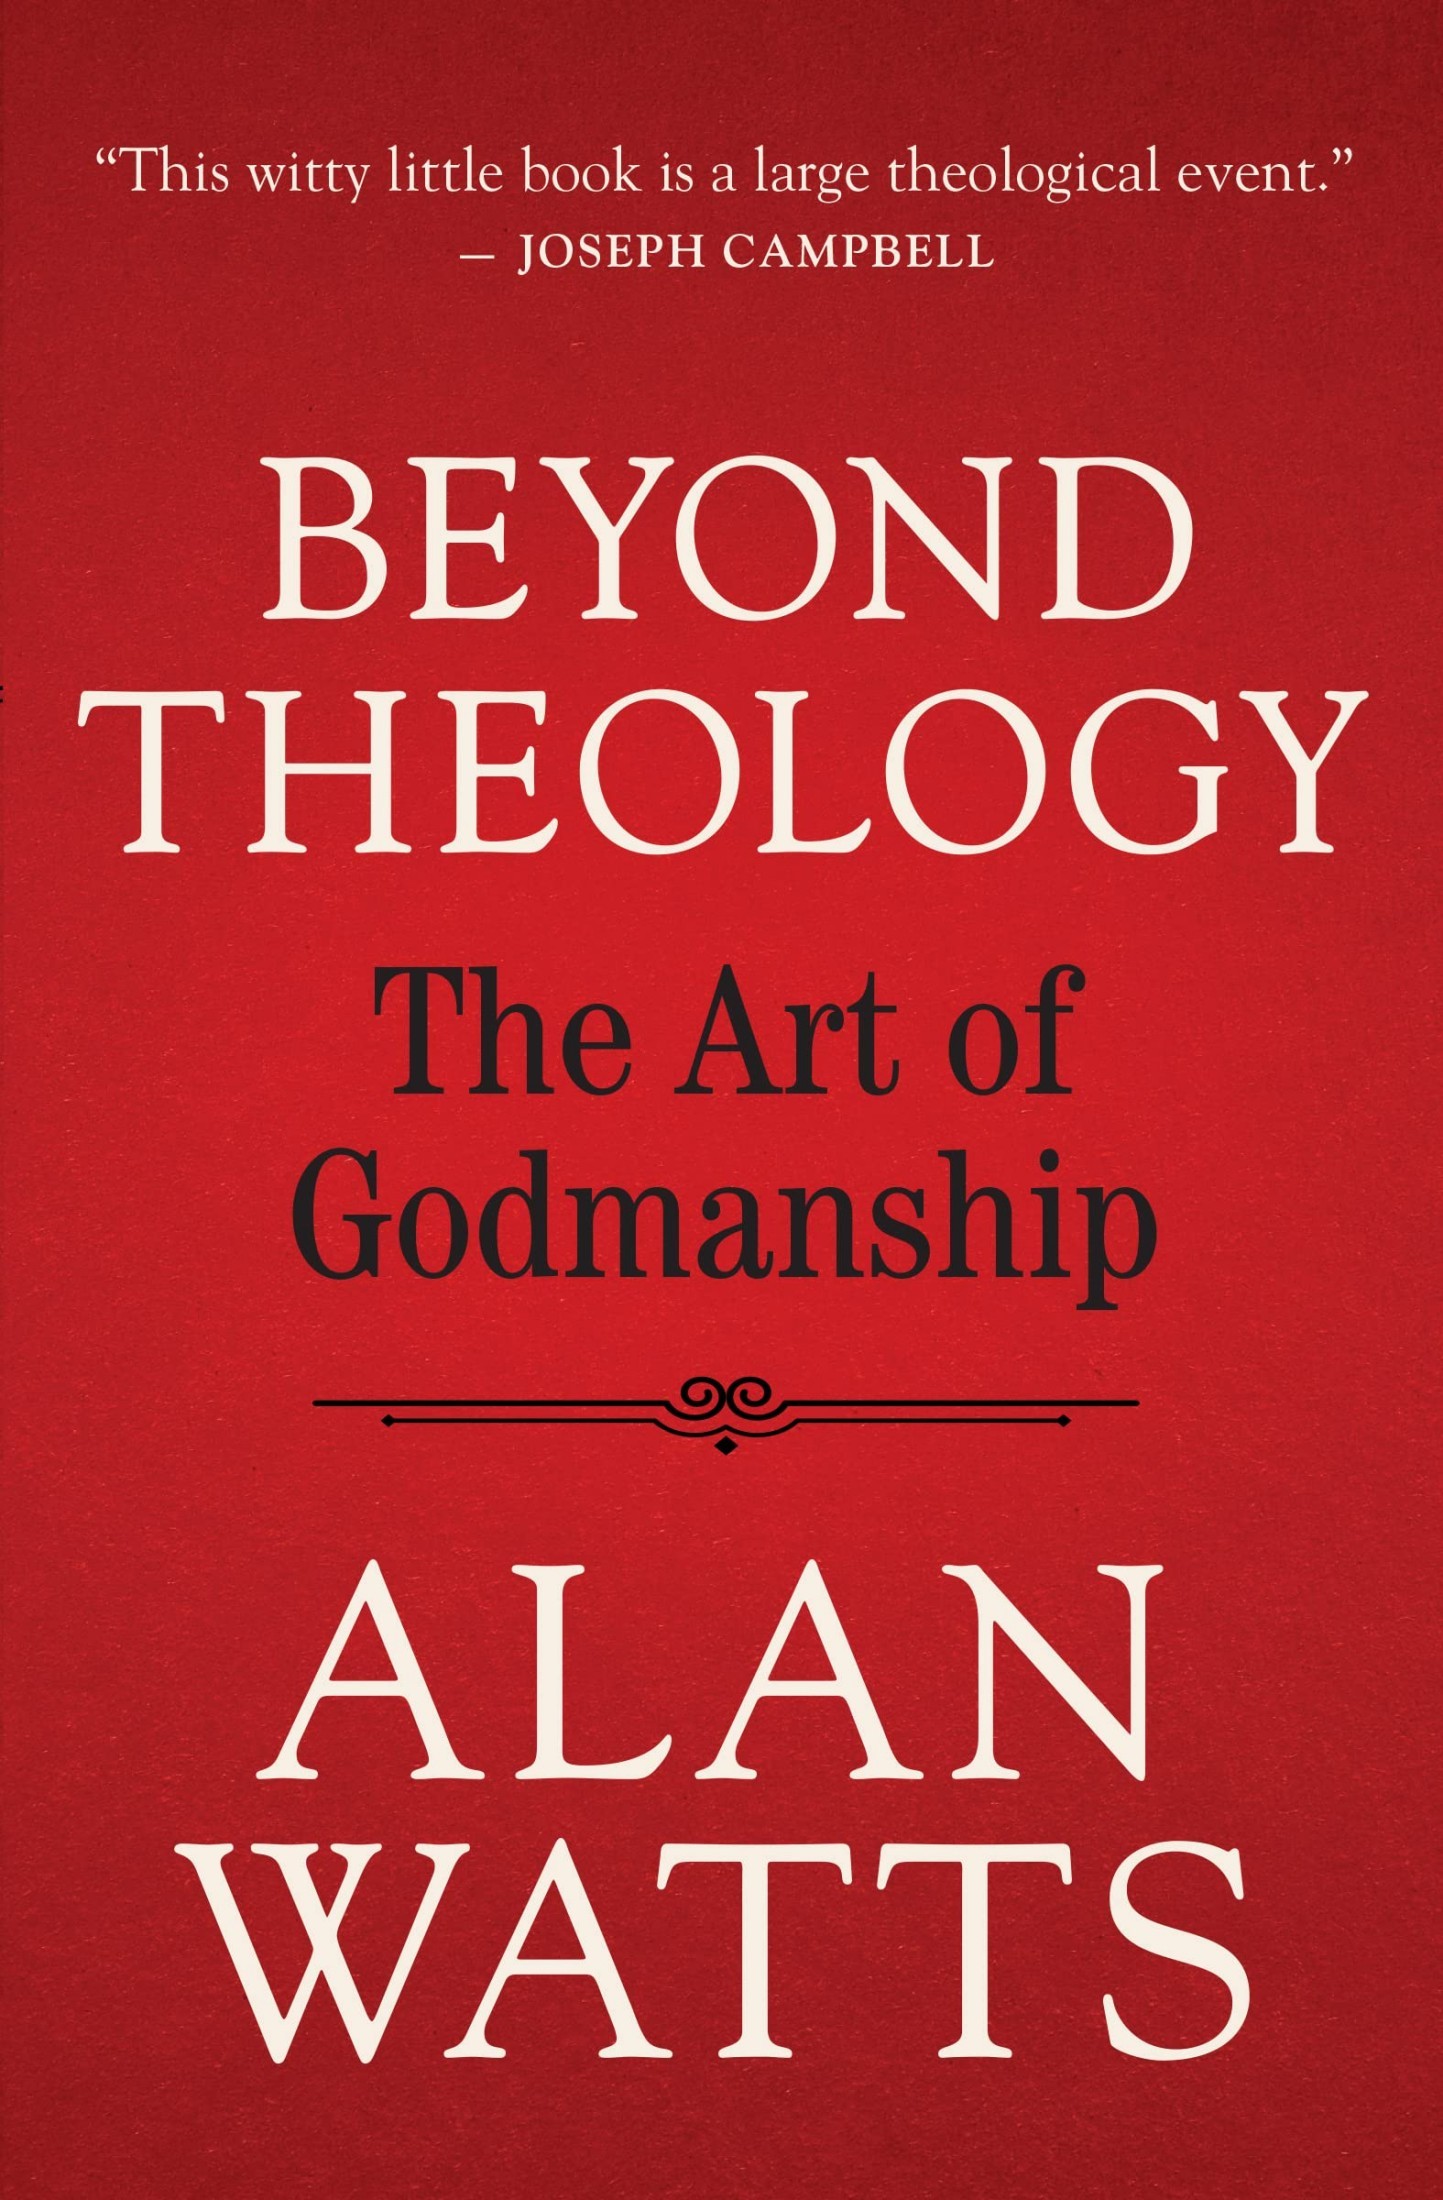 Beyond Theology: The Art of Godmanship